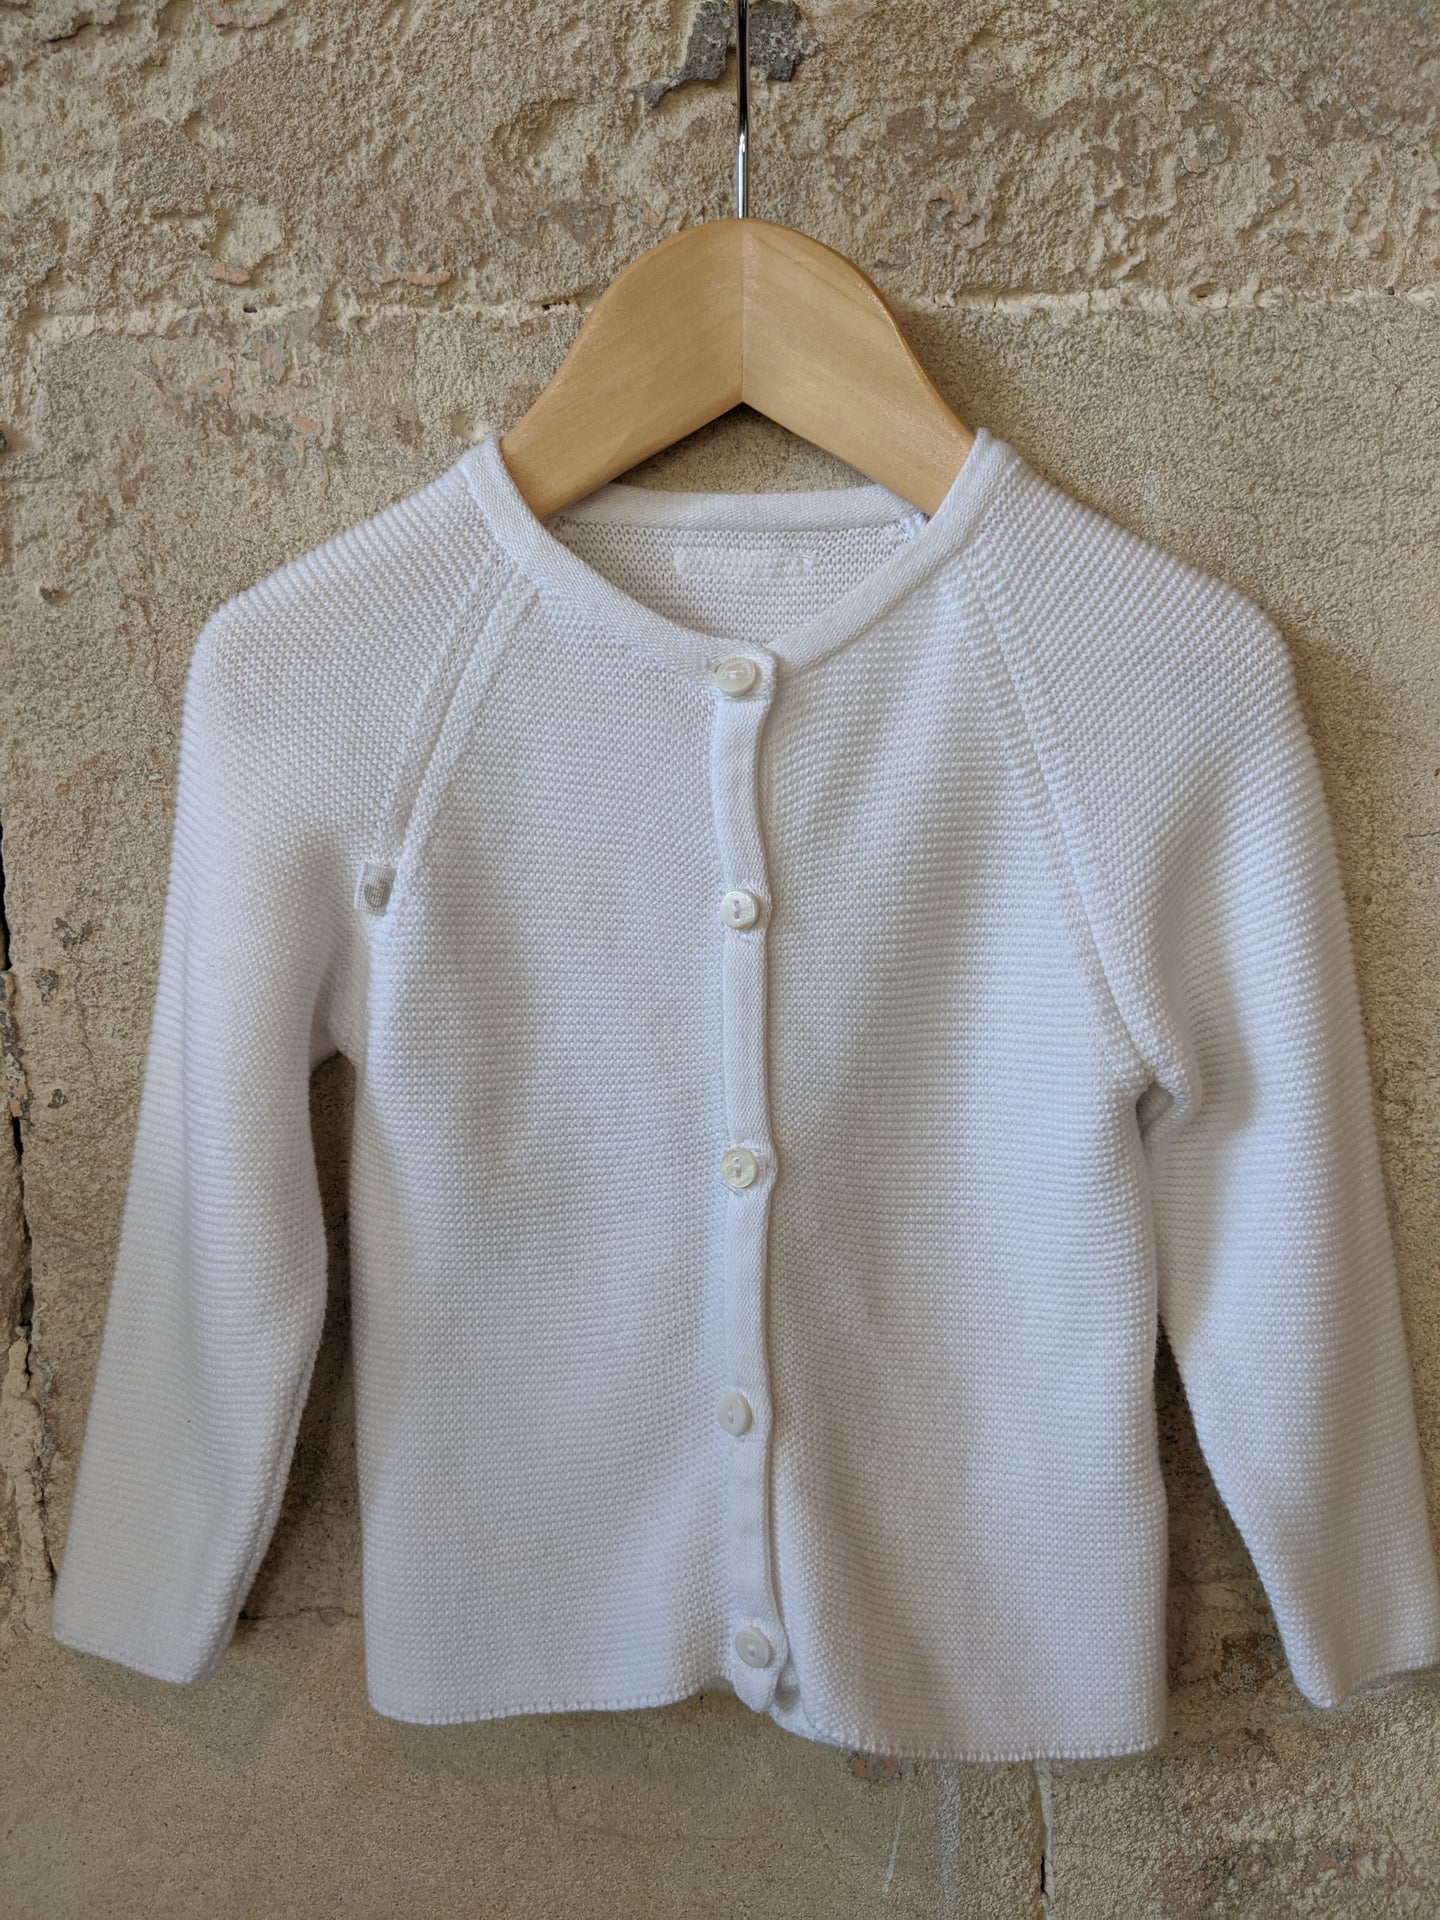 Smart, Stylish, White Cotton Cardigan - 6 Months